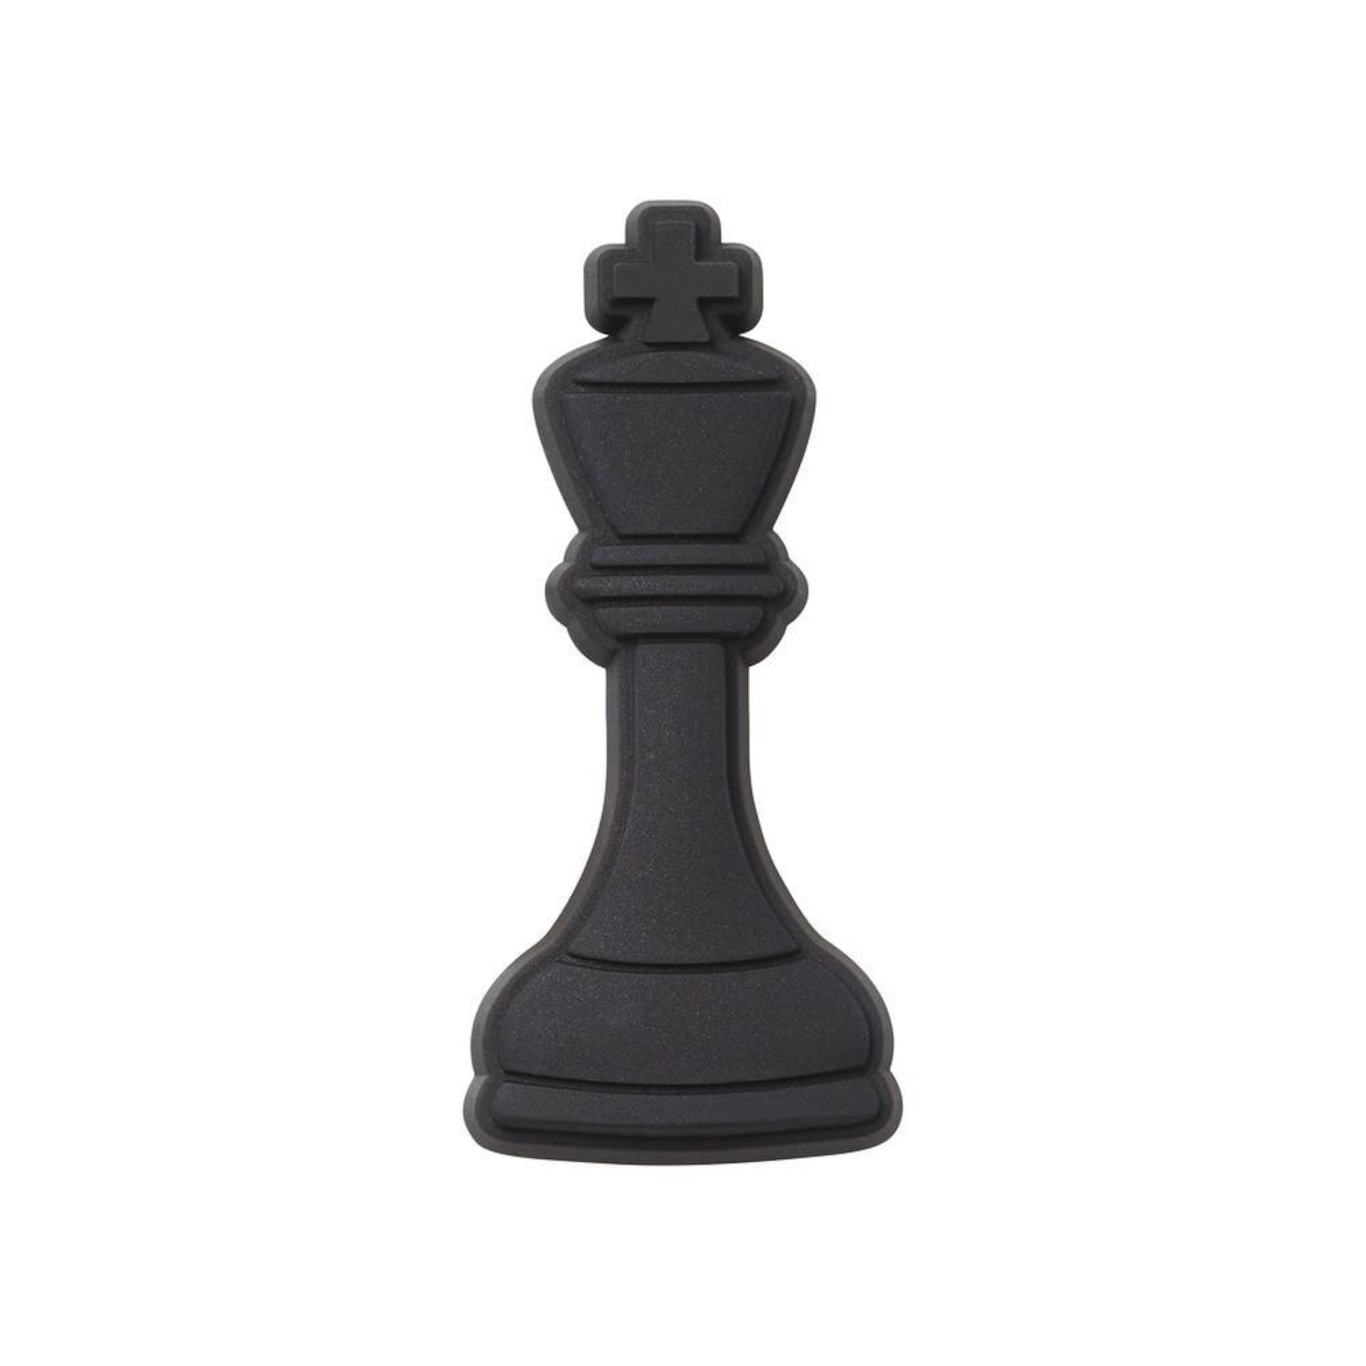 Produtos da categoria Jogos de xadrez à venda no Fortaleza, Facebook  Marketplace